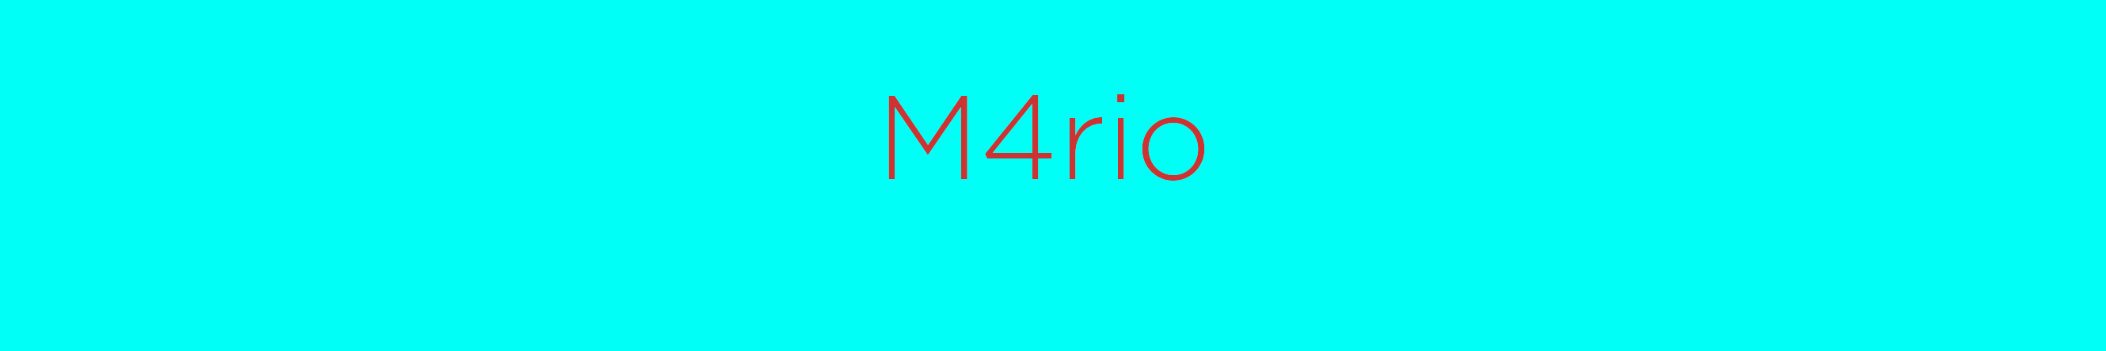 M4rioGl4ss